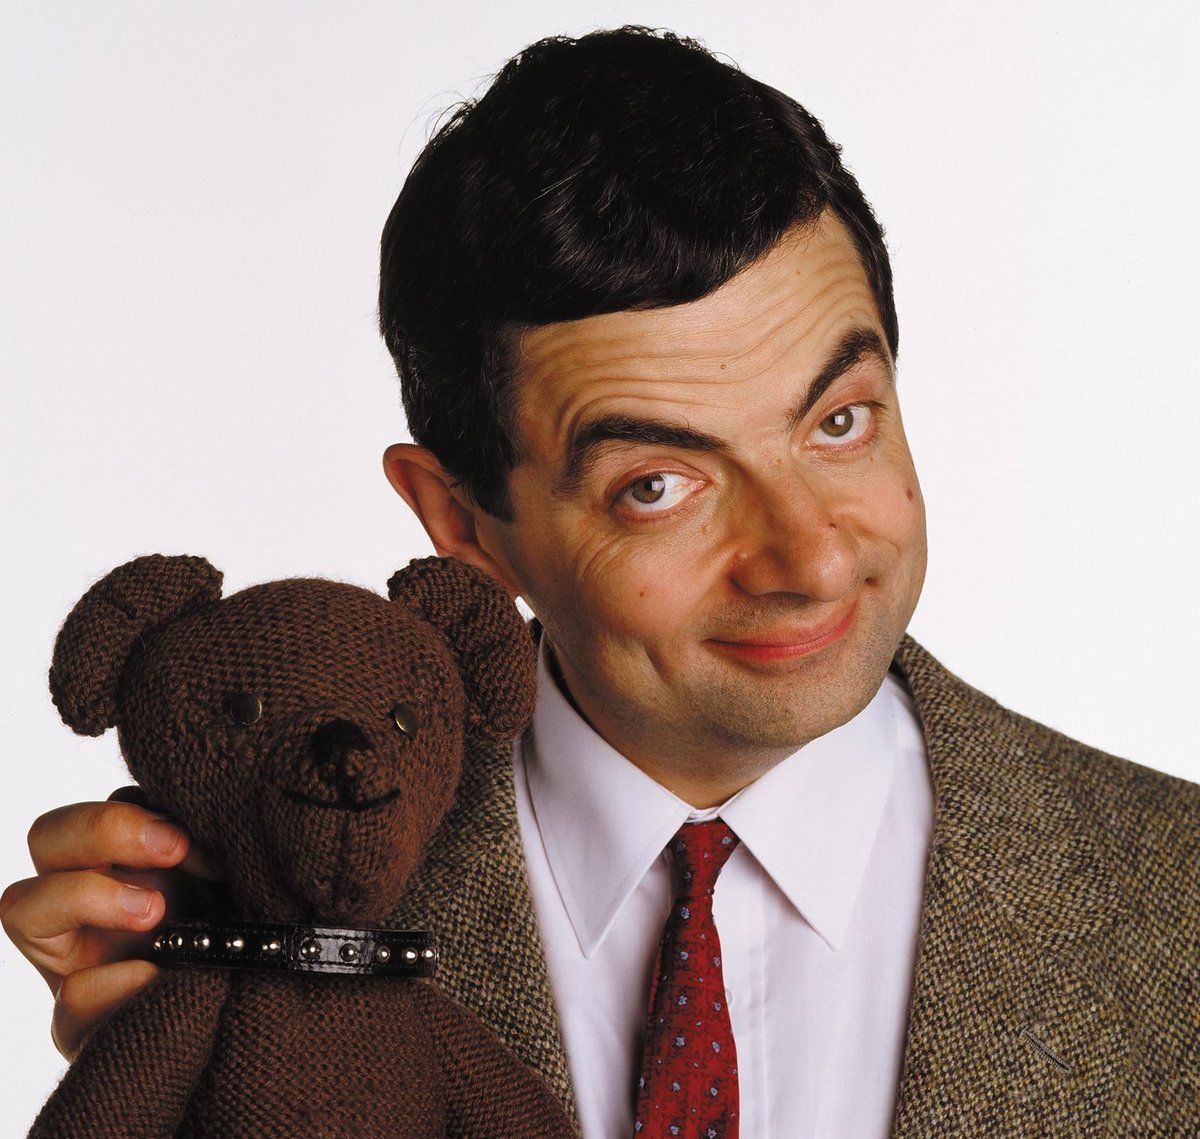 Pravý Mr. Bean